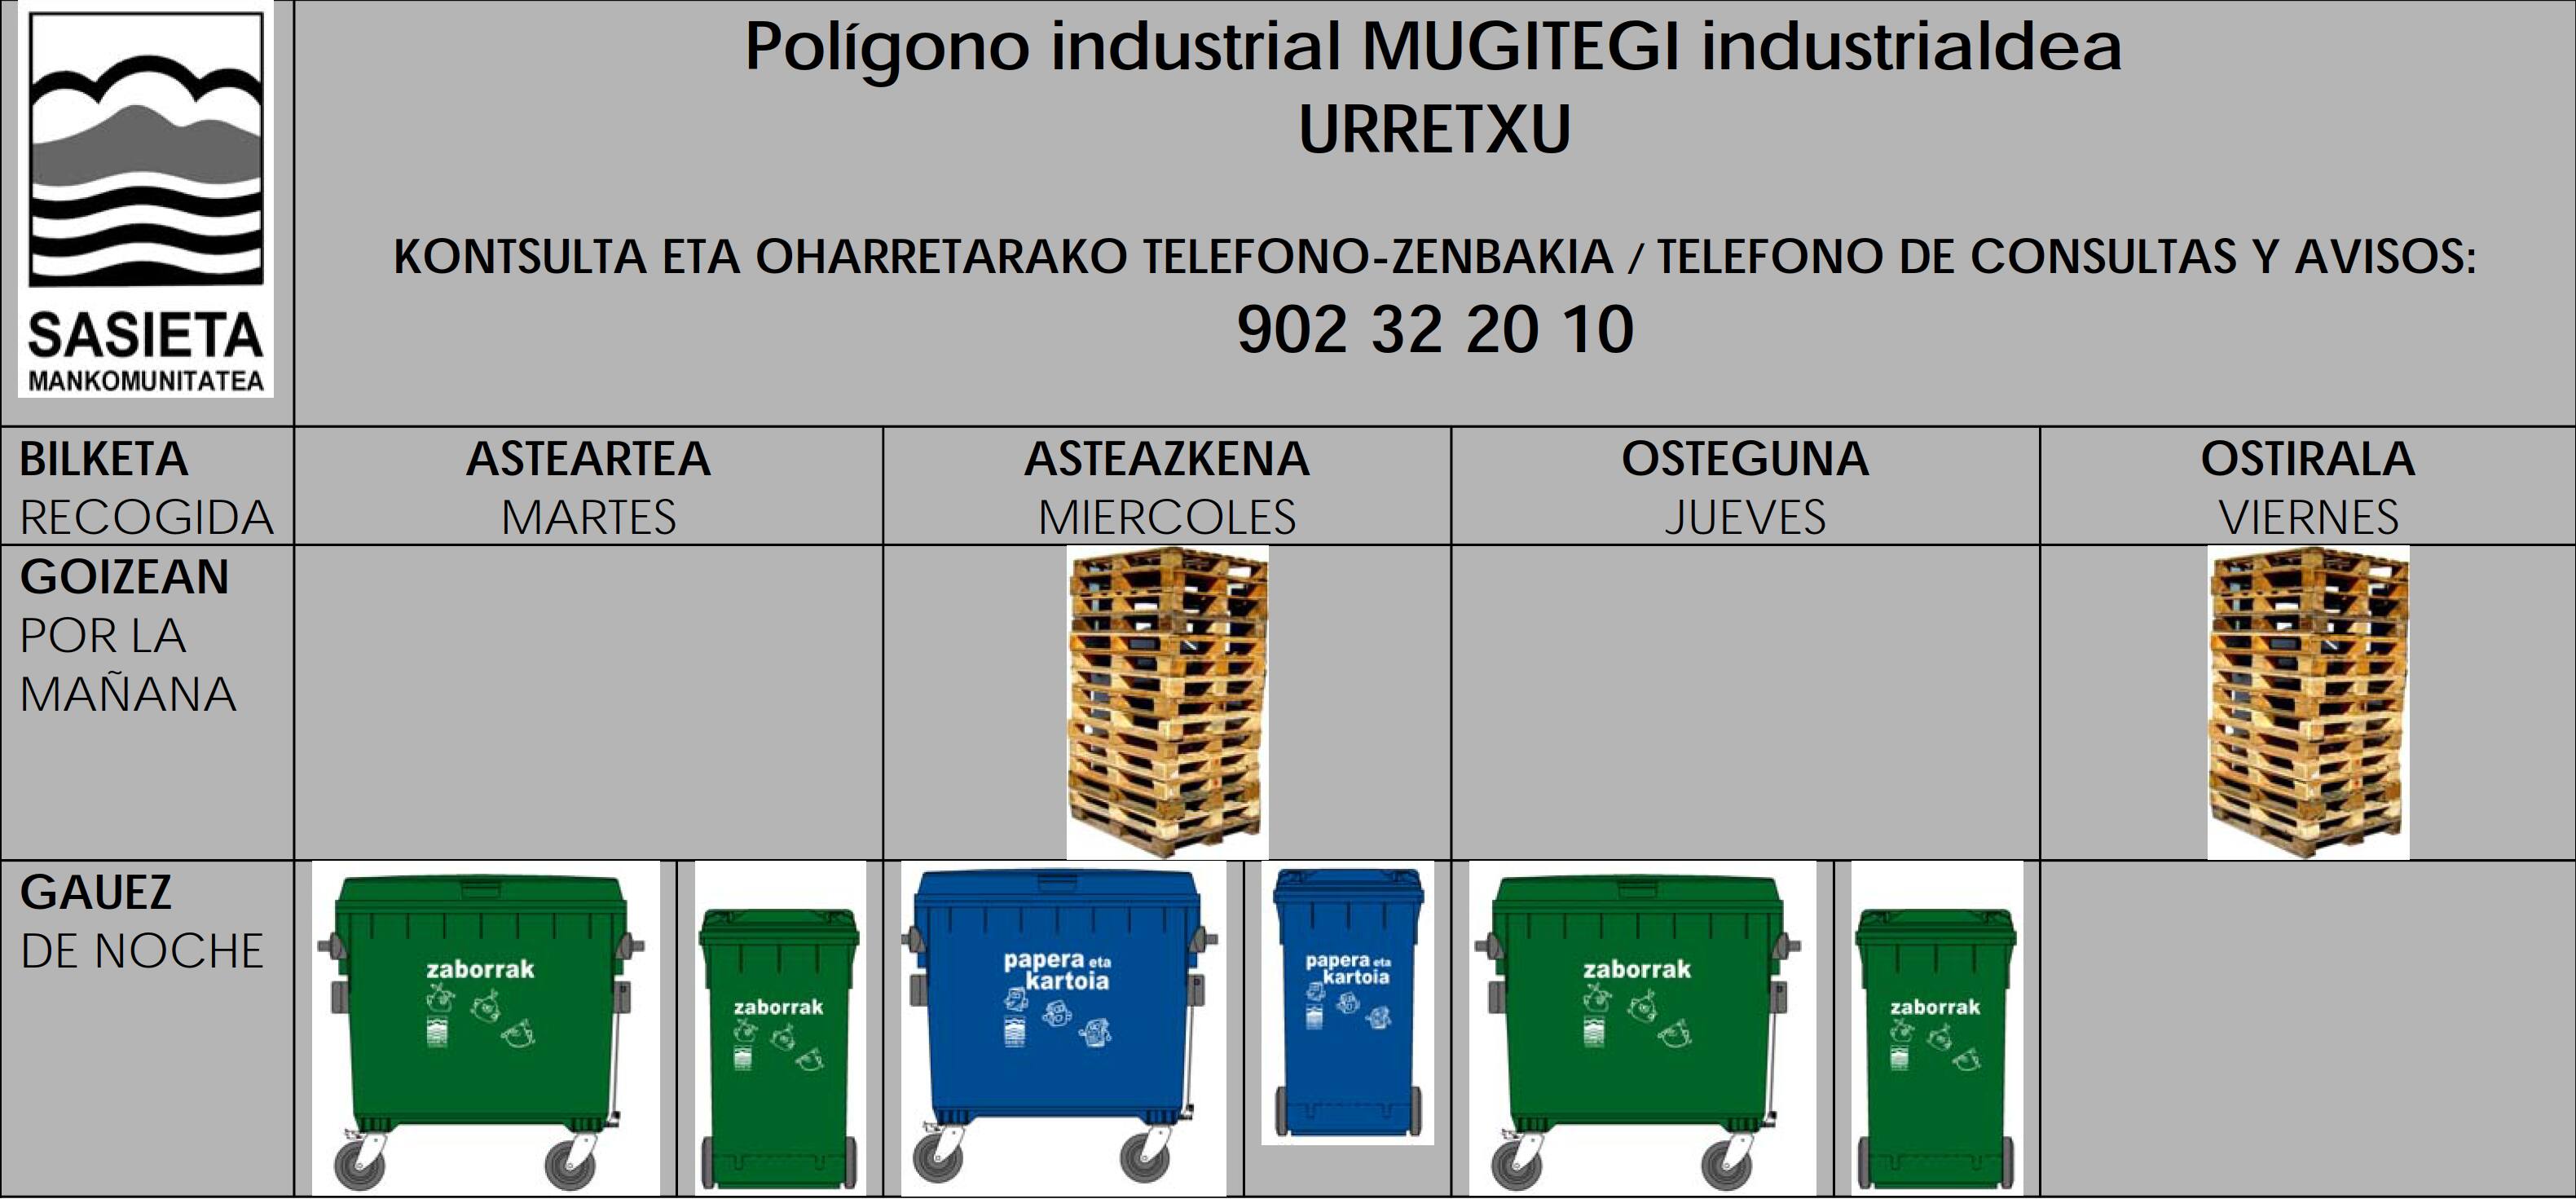 Residuos - Zona industrial de Mugitegi en Urretxu